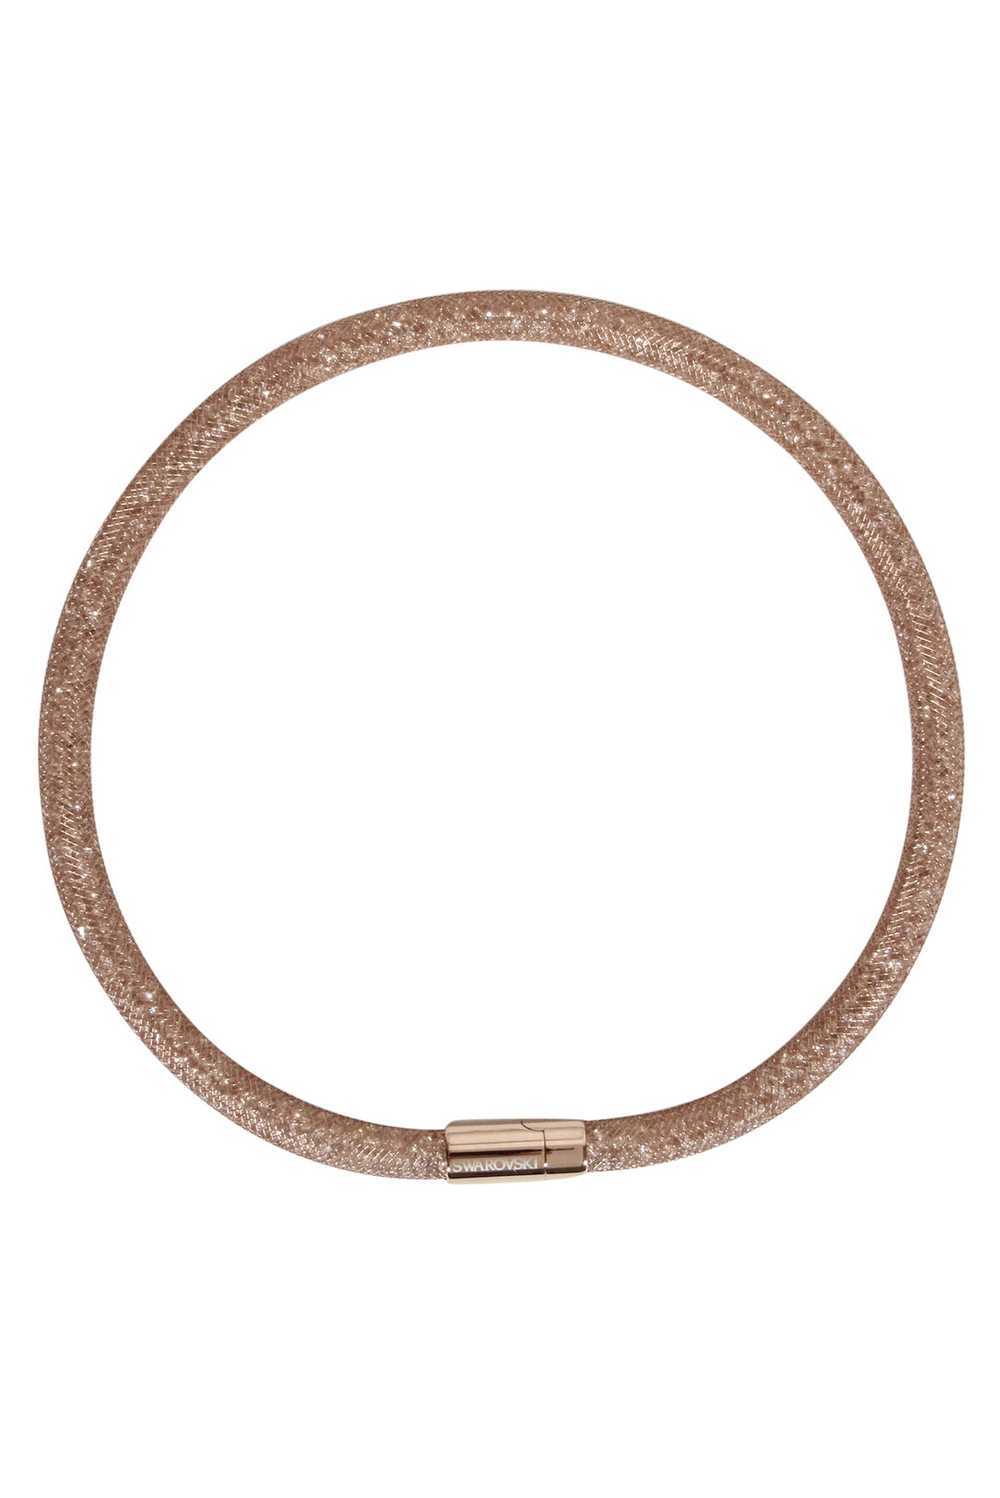 Swarovski - Gold “Stardust” Double Wrap Bracelet - image 1